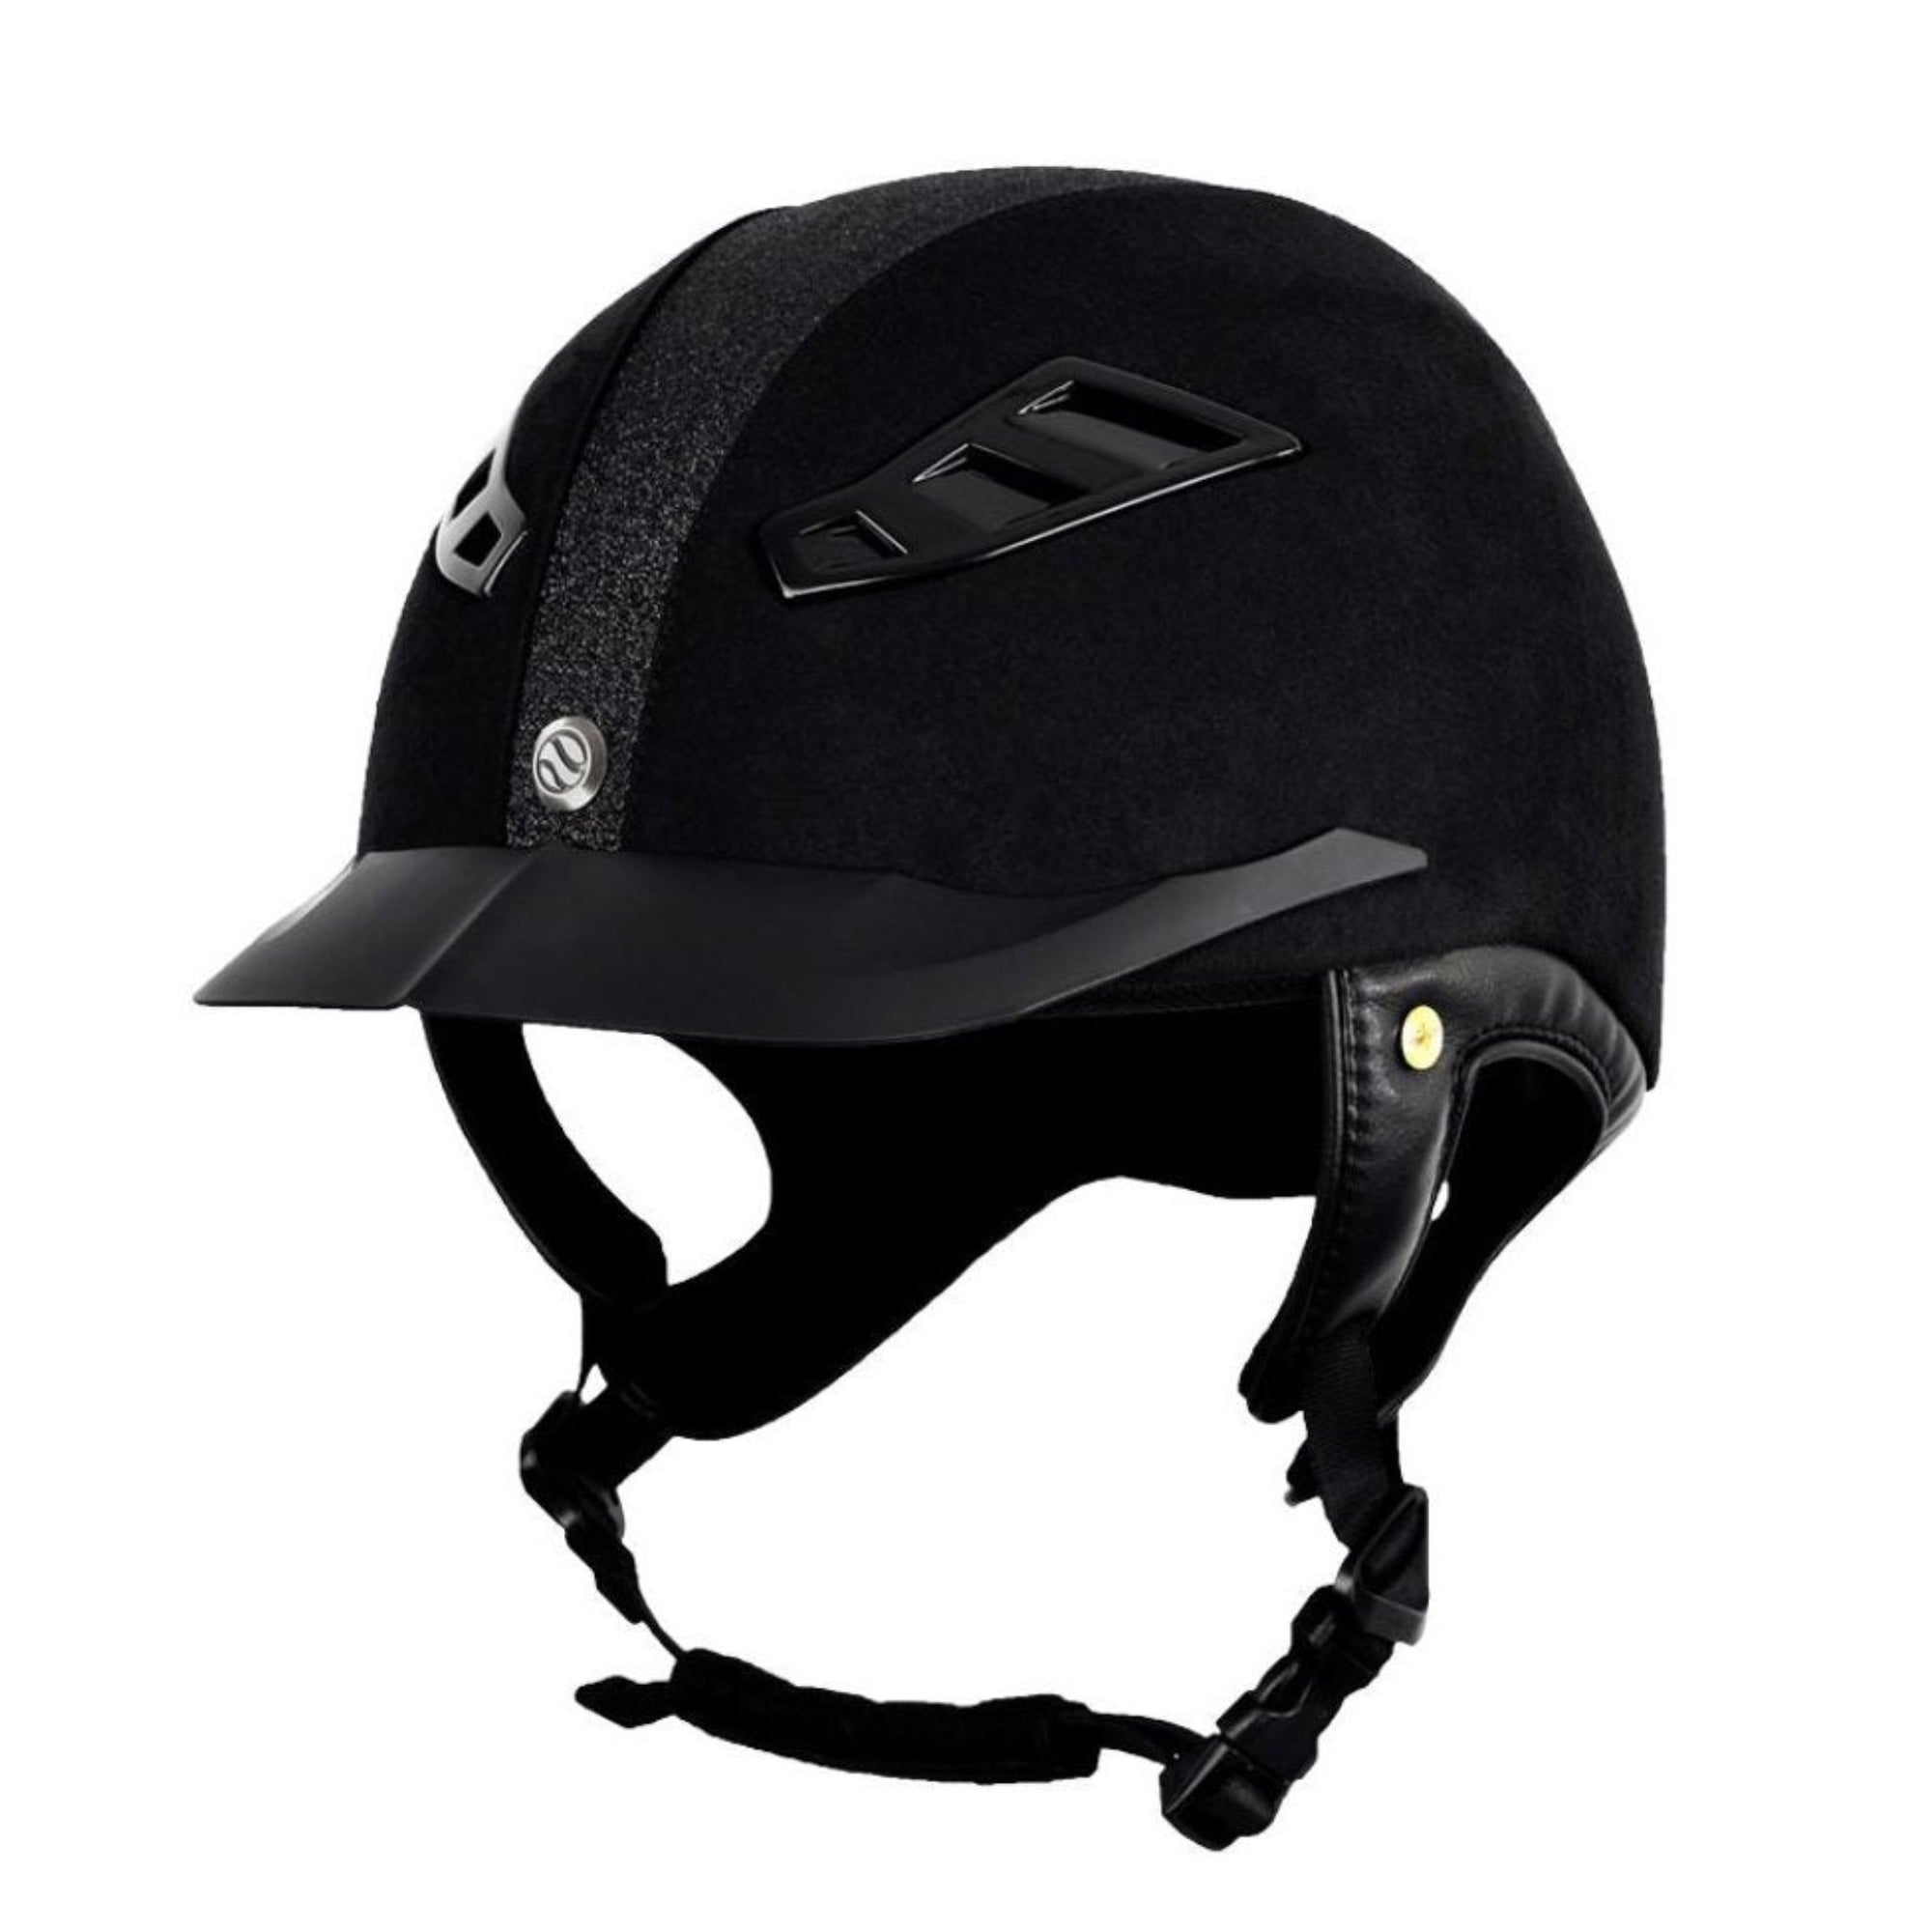 Black microfiber helmet with moderately glittery, sandy texture across top.